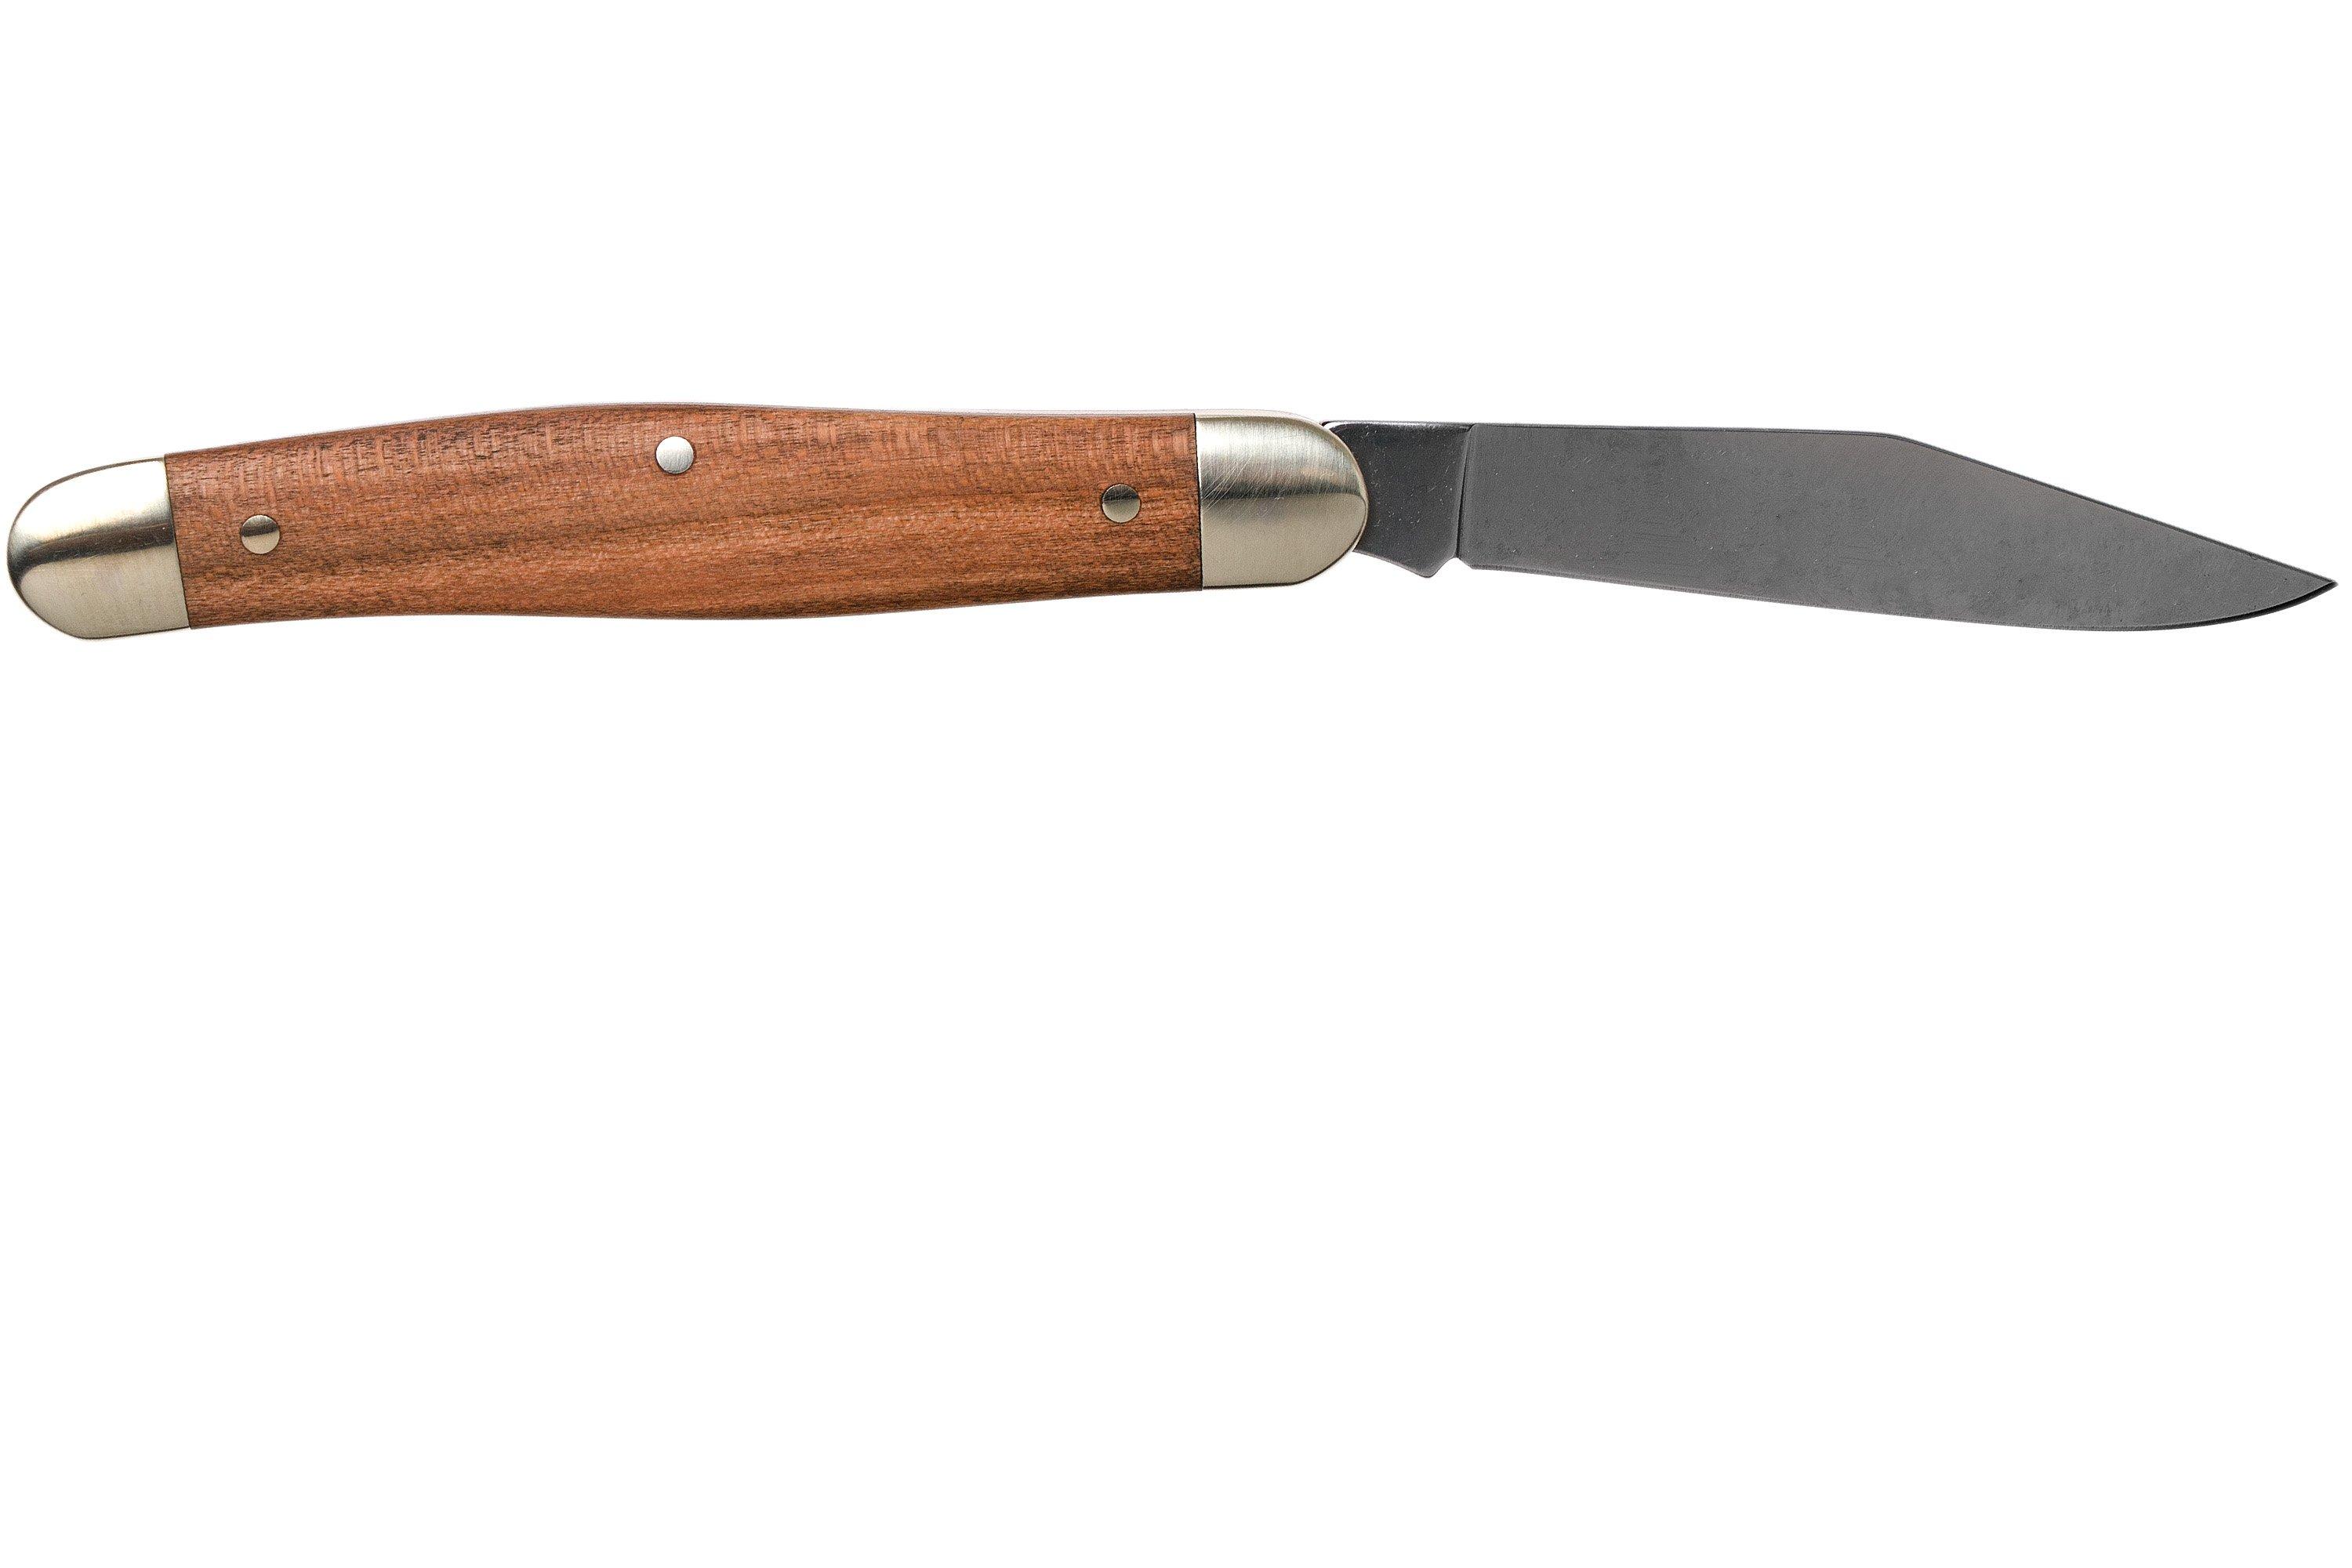 Böker Stockman Bog Oak 117482 pocket knife  Advantageously shopping at